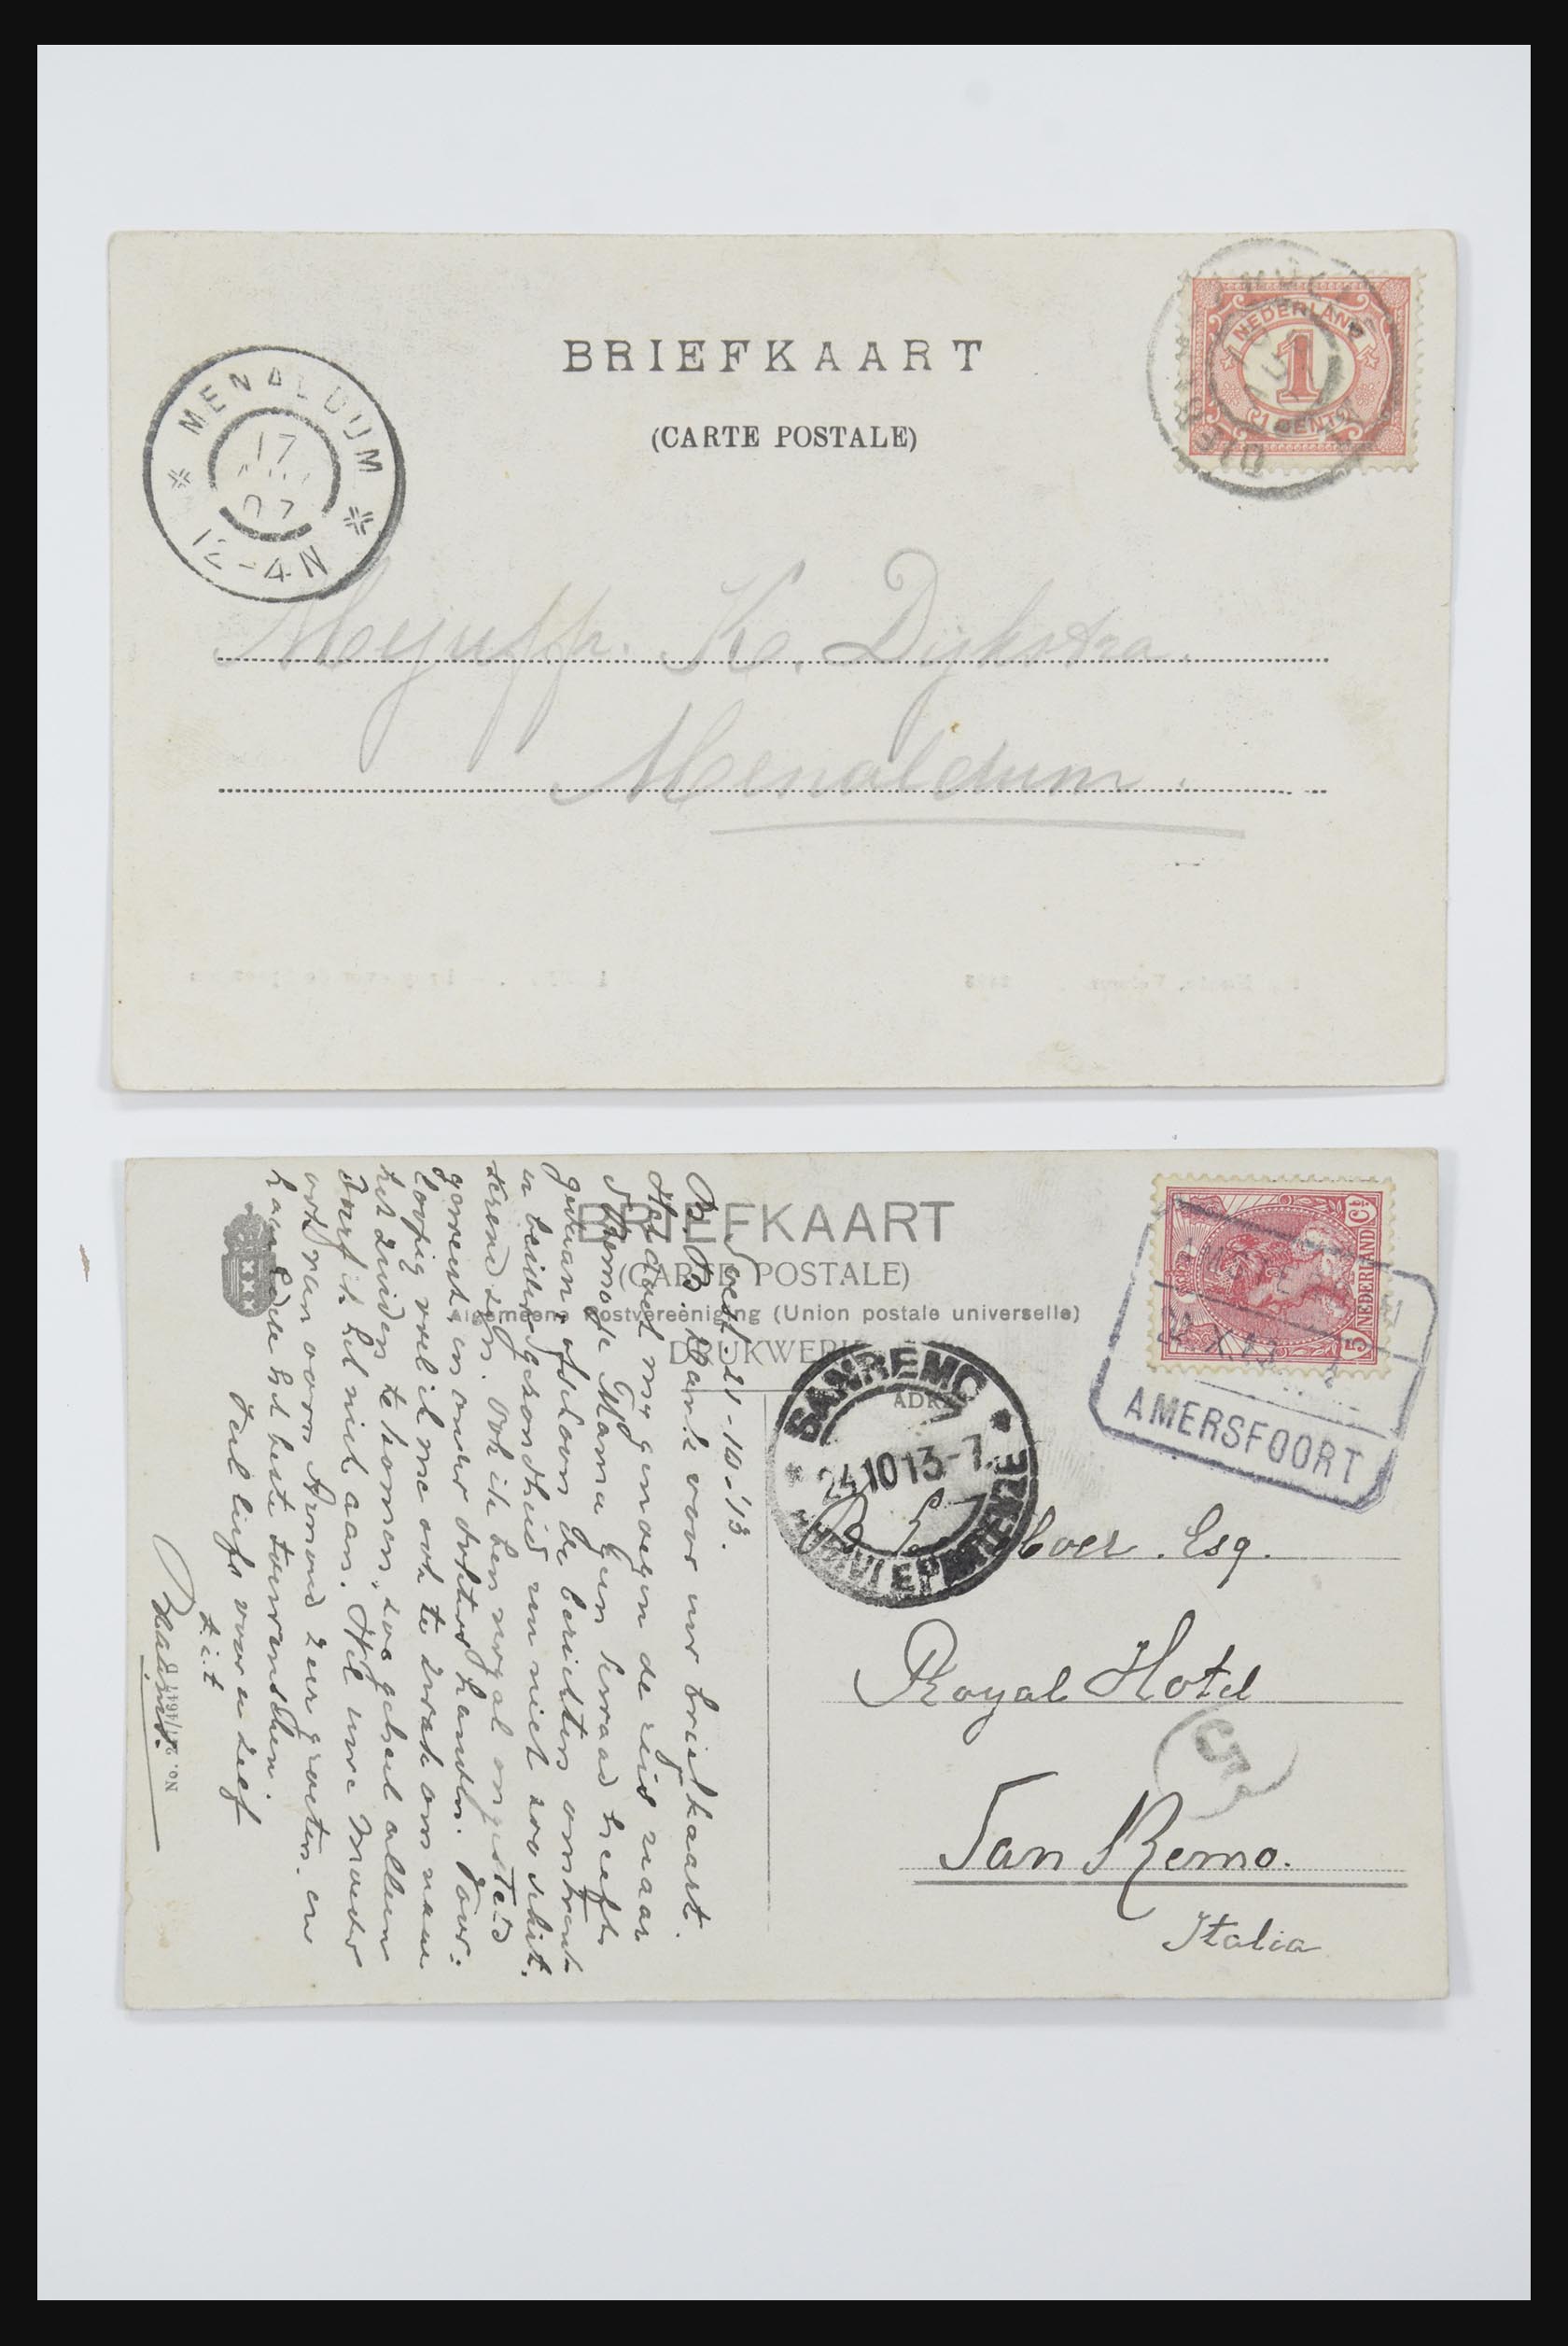 31668 002 - 31668 Netherlands picture postcards 1905-1935.